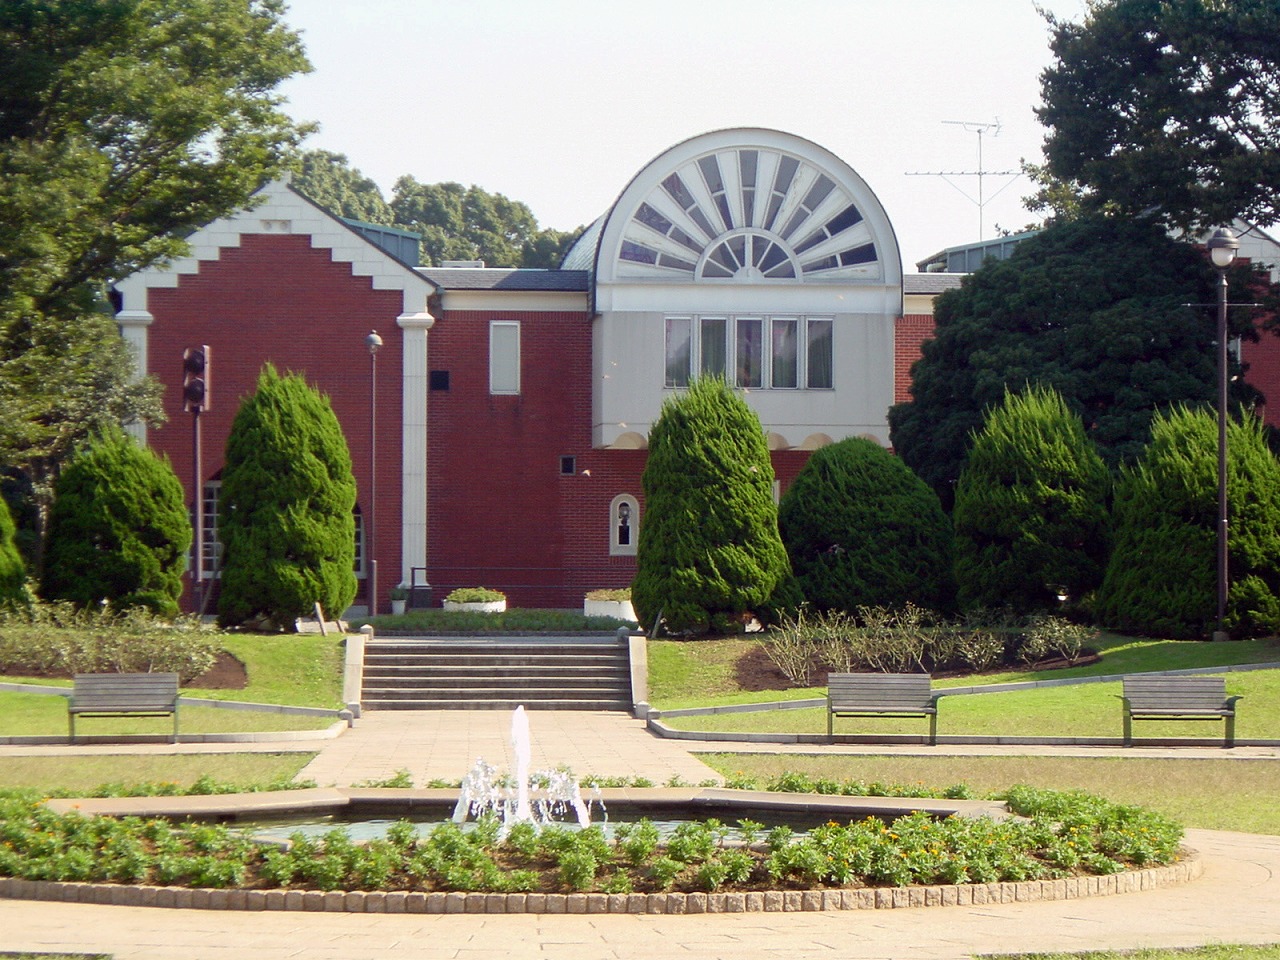 The Osaragi Jiro Memorial Museum and fountain